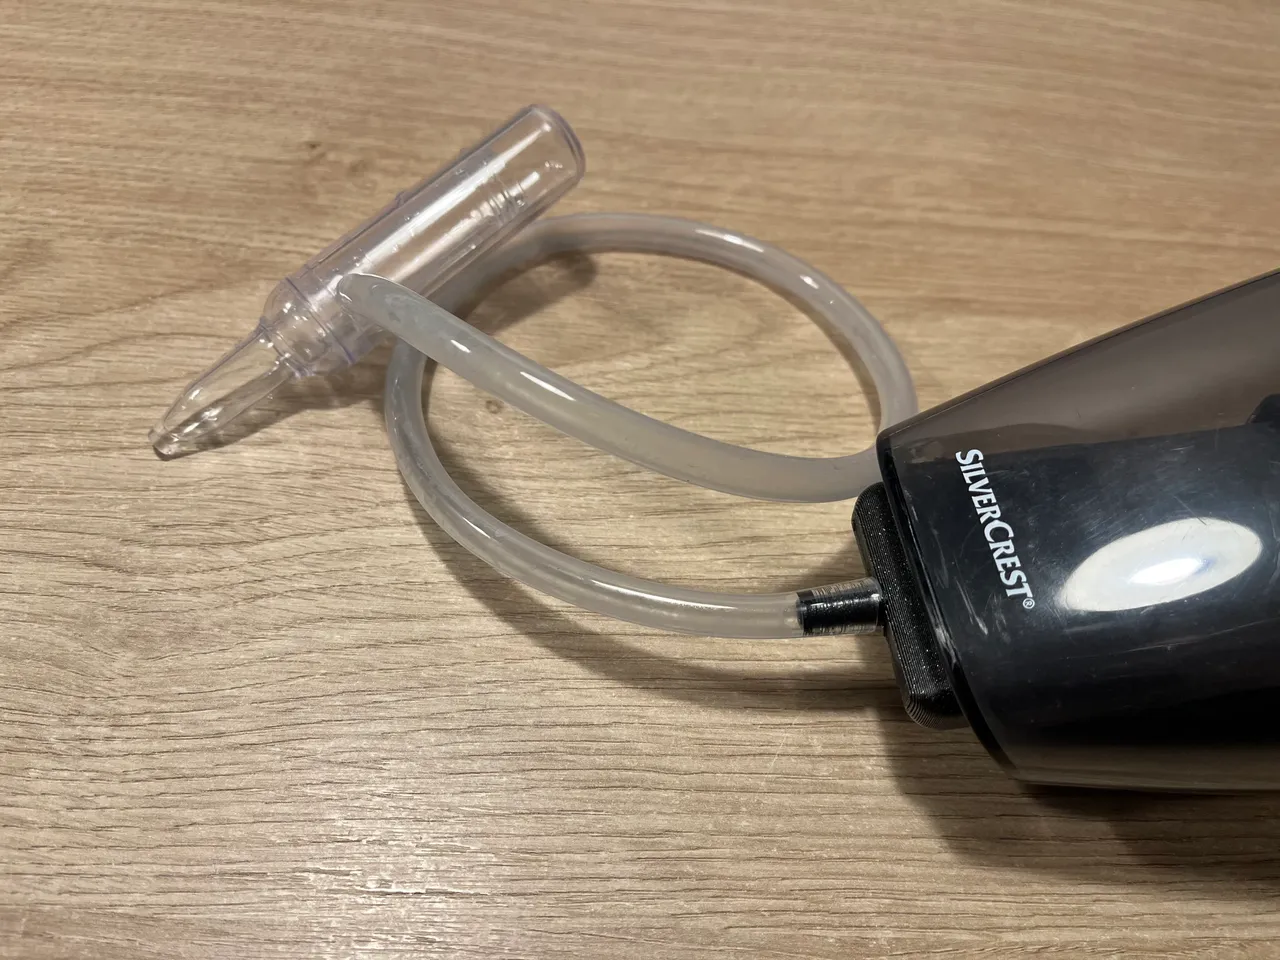 Nasal aspirator with vacuum cleaner adapter